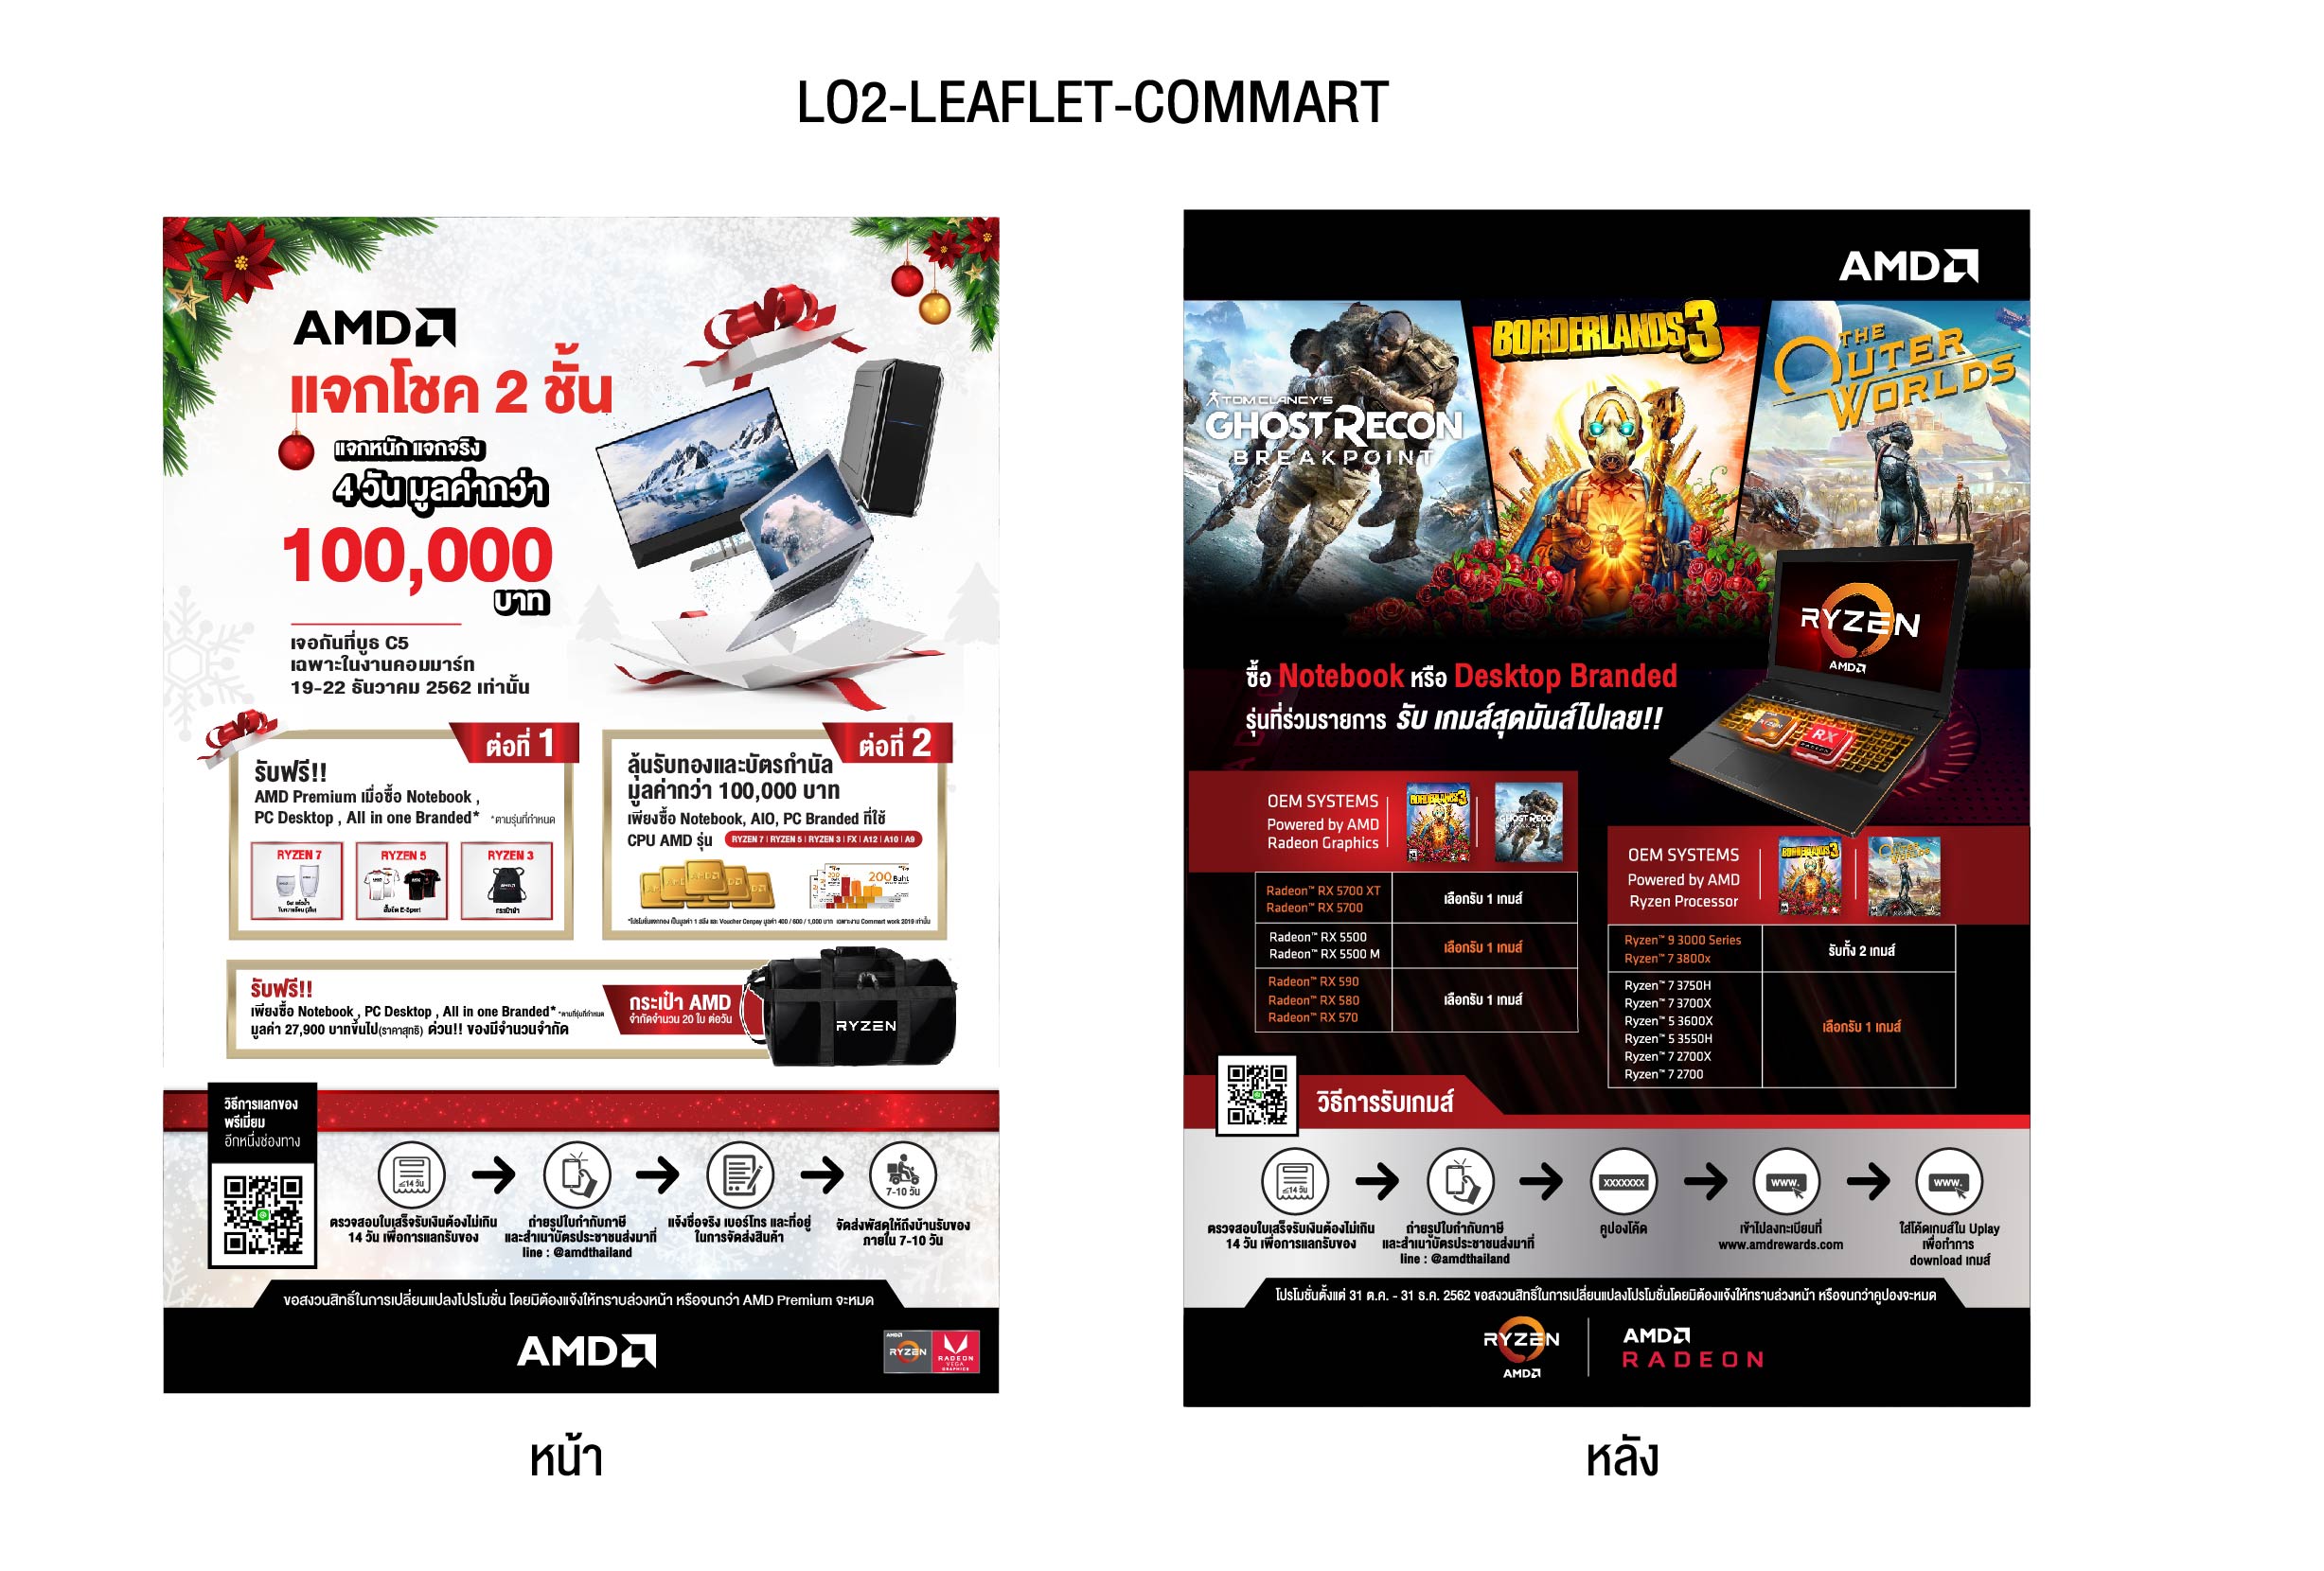 lo2 leaflet commart 02 AMD จัดโปรแรงส่งท้ายปีต้อนรับงานคอมมาร์ท ตั้งแต่วันที่ 19   22 ธ.ค. ศกนี้